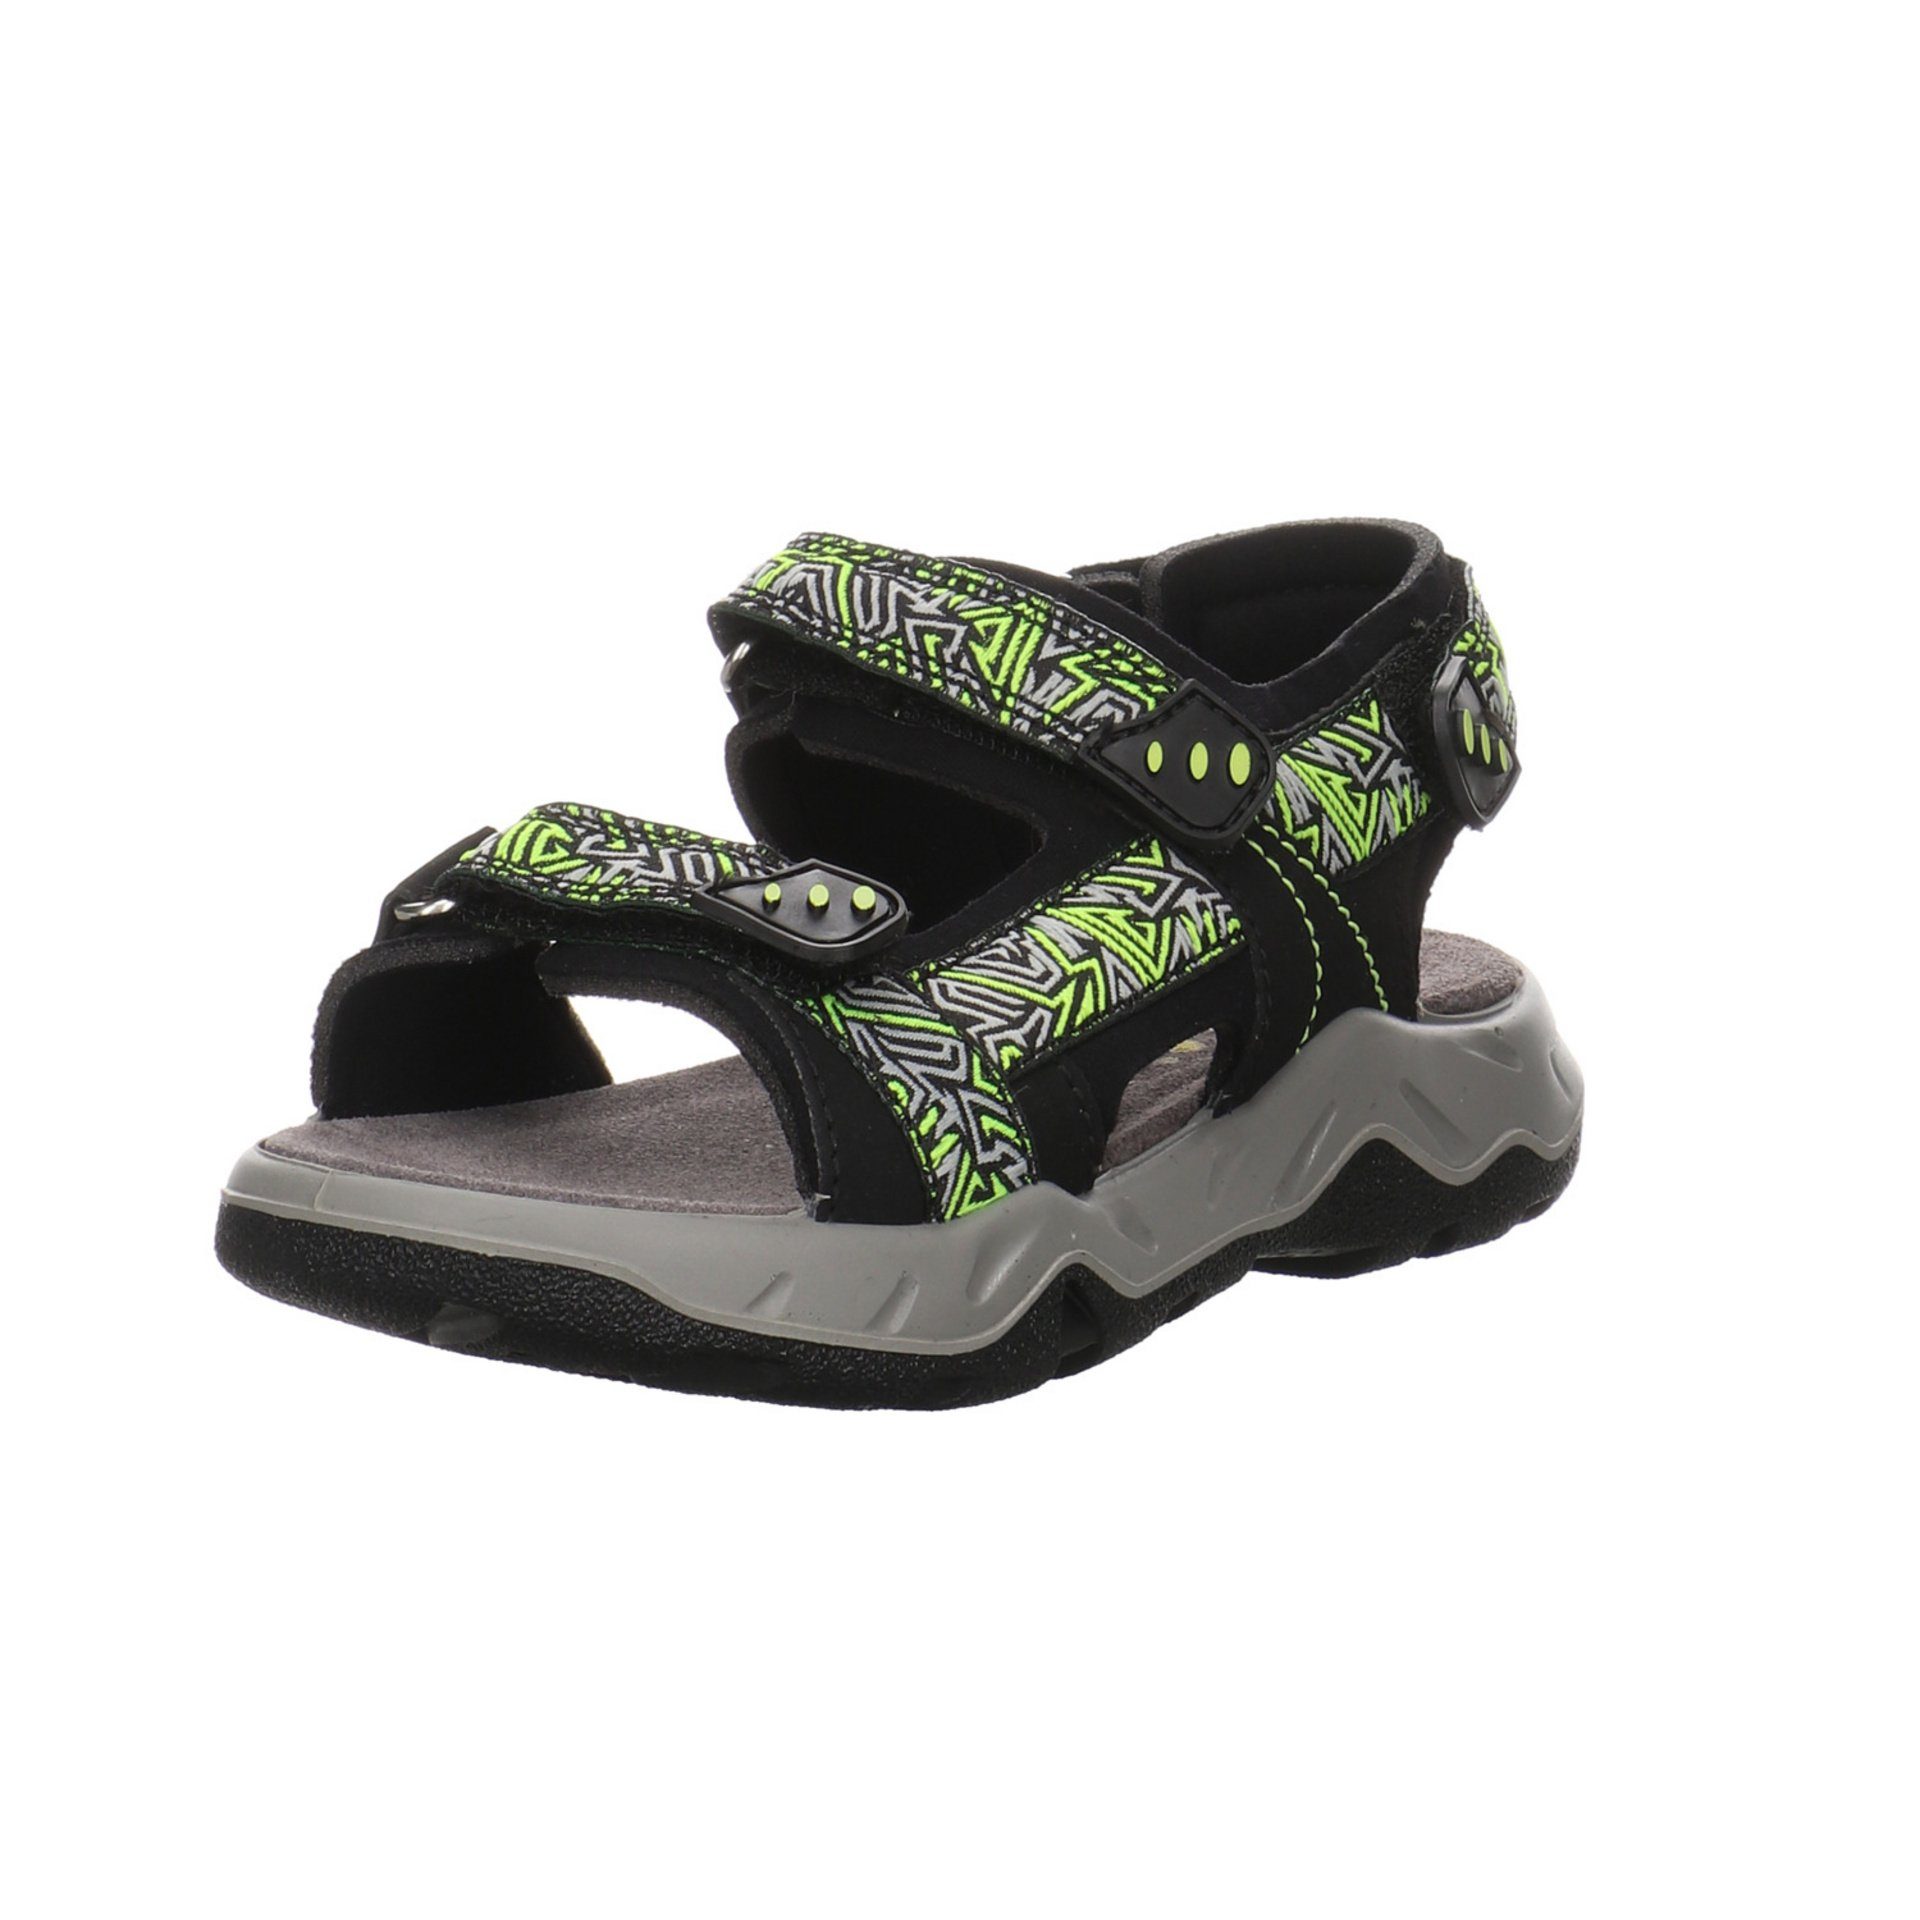 Salamander Lurchi Jungen Sandalen Schuhe Odono Sandale Kinderschuhe Sandale Synthetikkombination Black Multi | Riemchensandalen